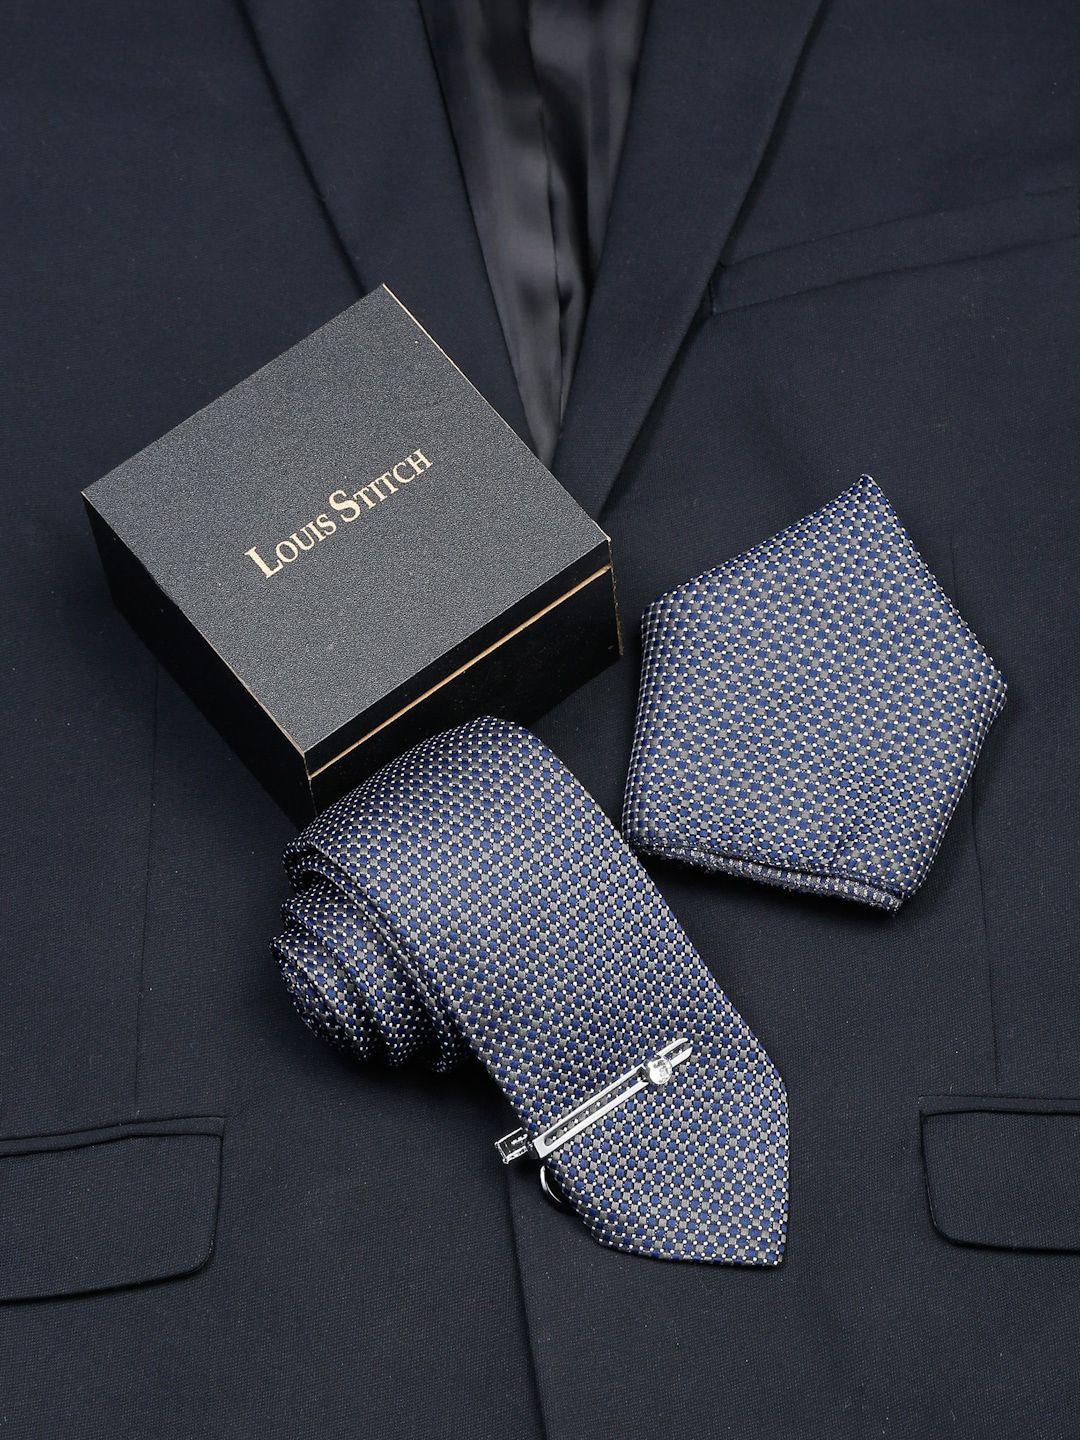 louis stitch men woven design broad tie with crome pin & pocket square